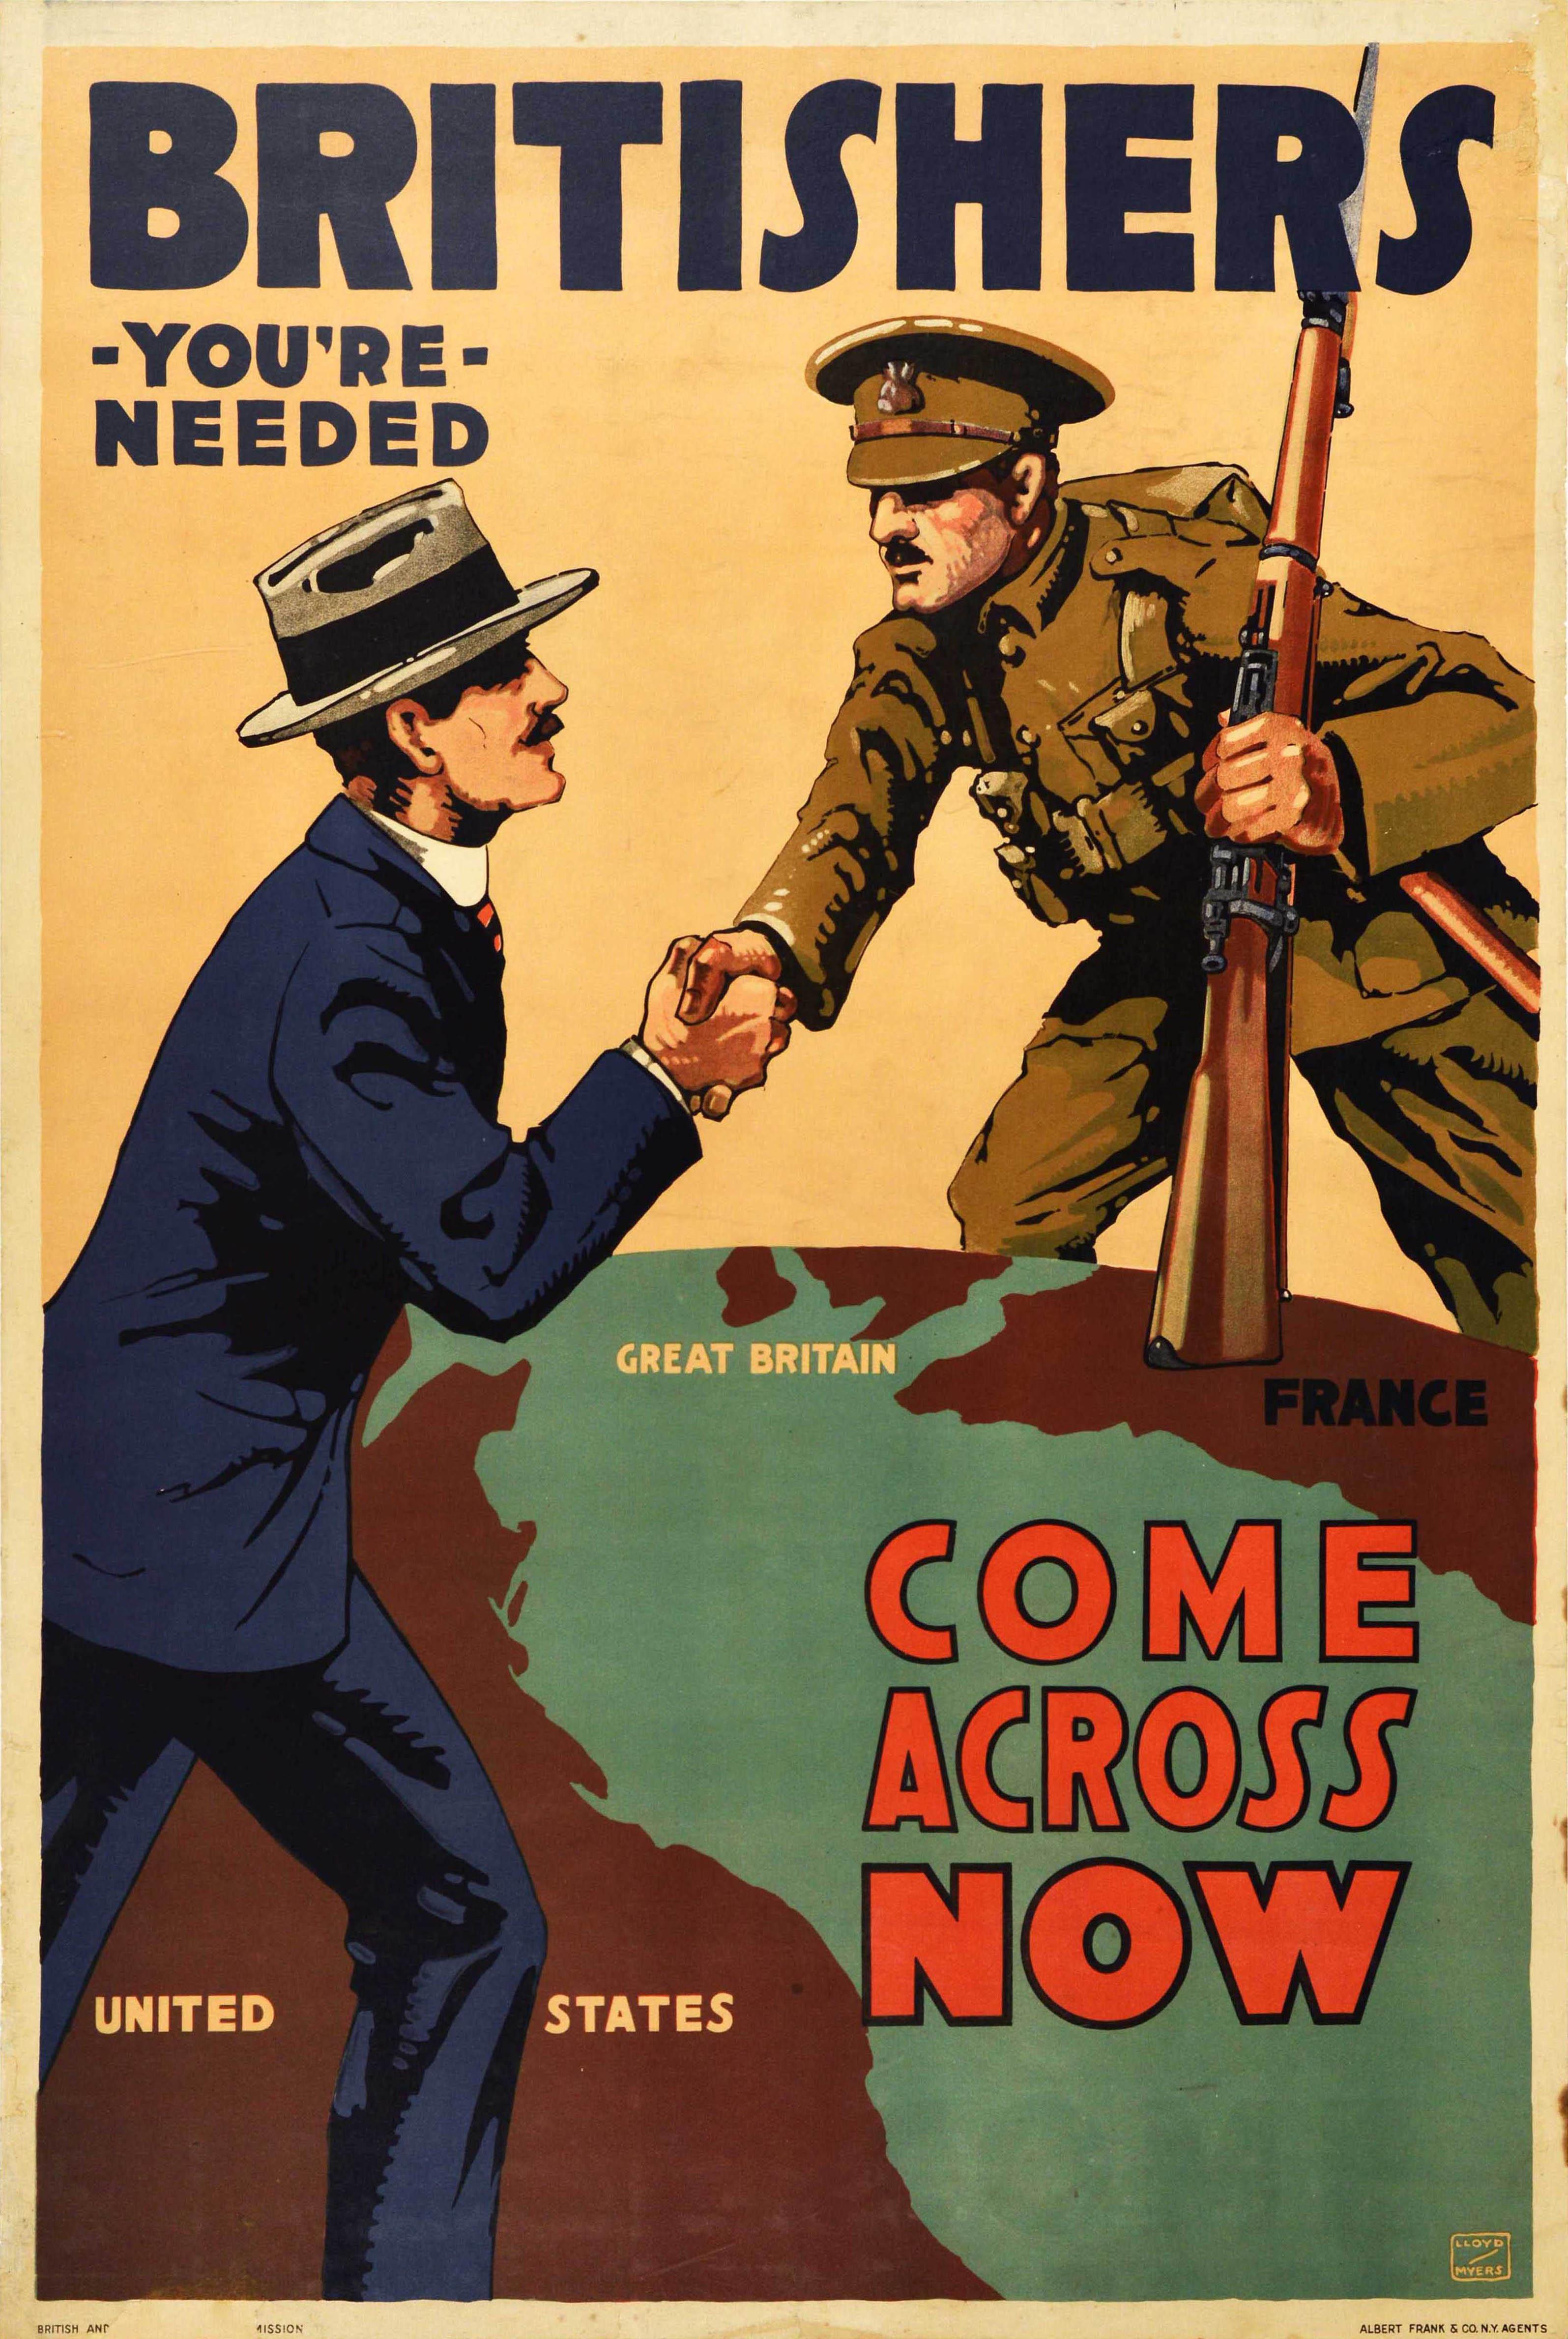 Lloyd Myers Print – Original Antikes Original WWI-Rekrutierungsplakat Britishers You're Needed Come Across Now